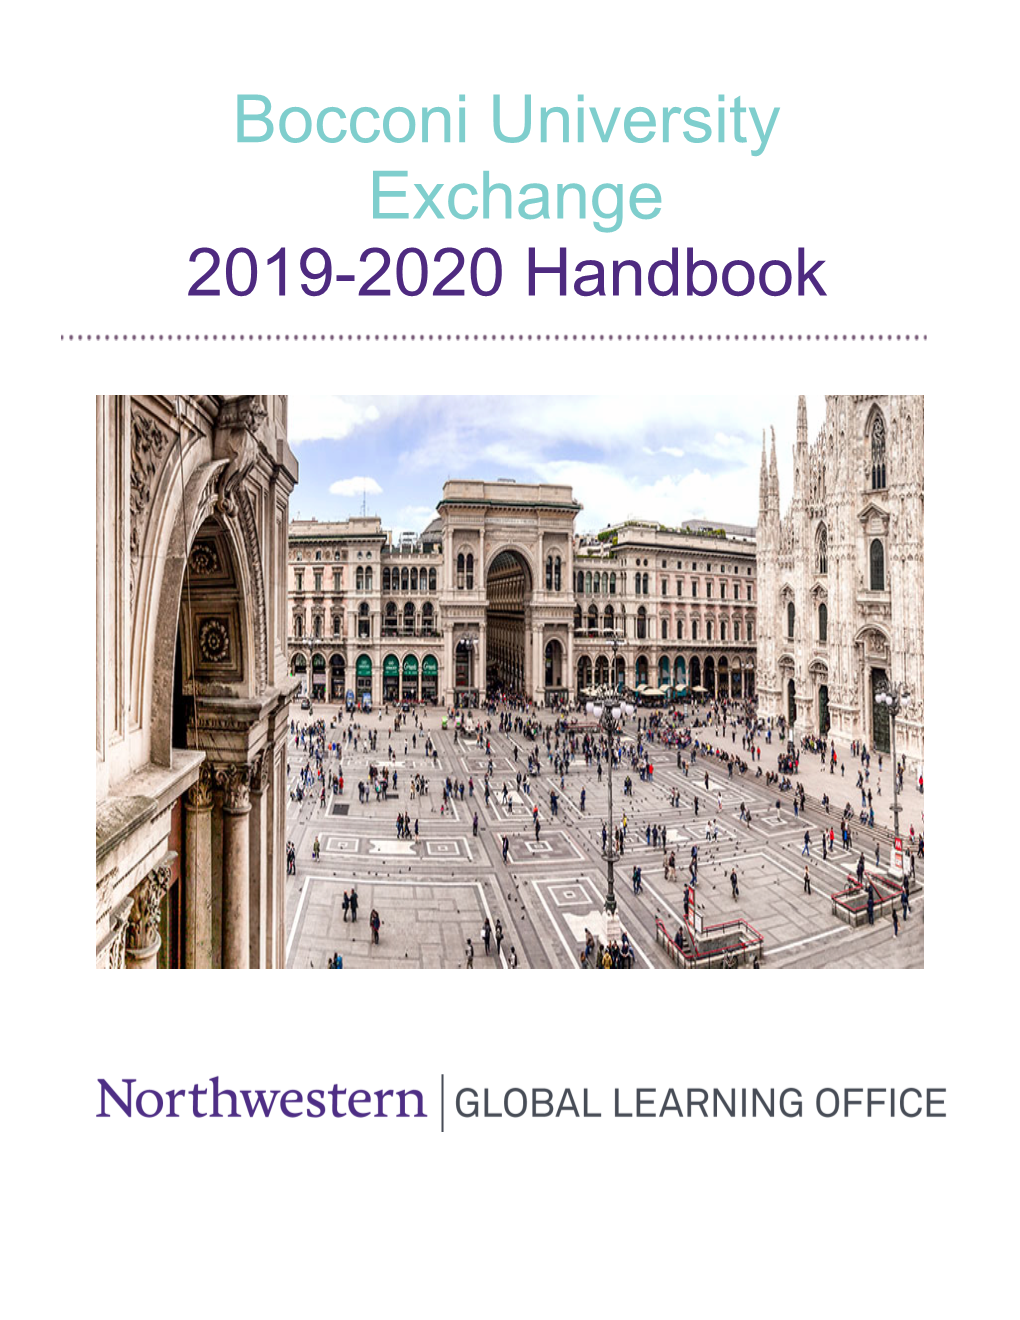 Bocconi University Exchange 2019-2020 Handbook